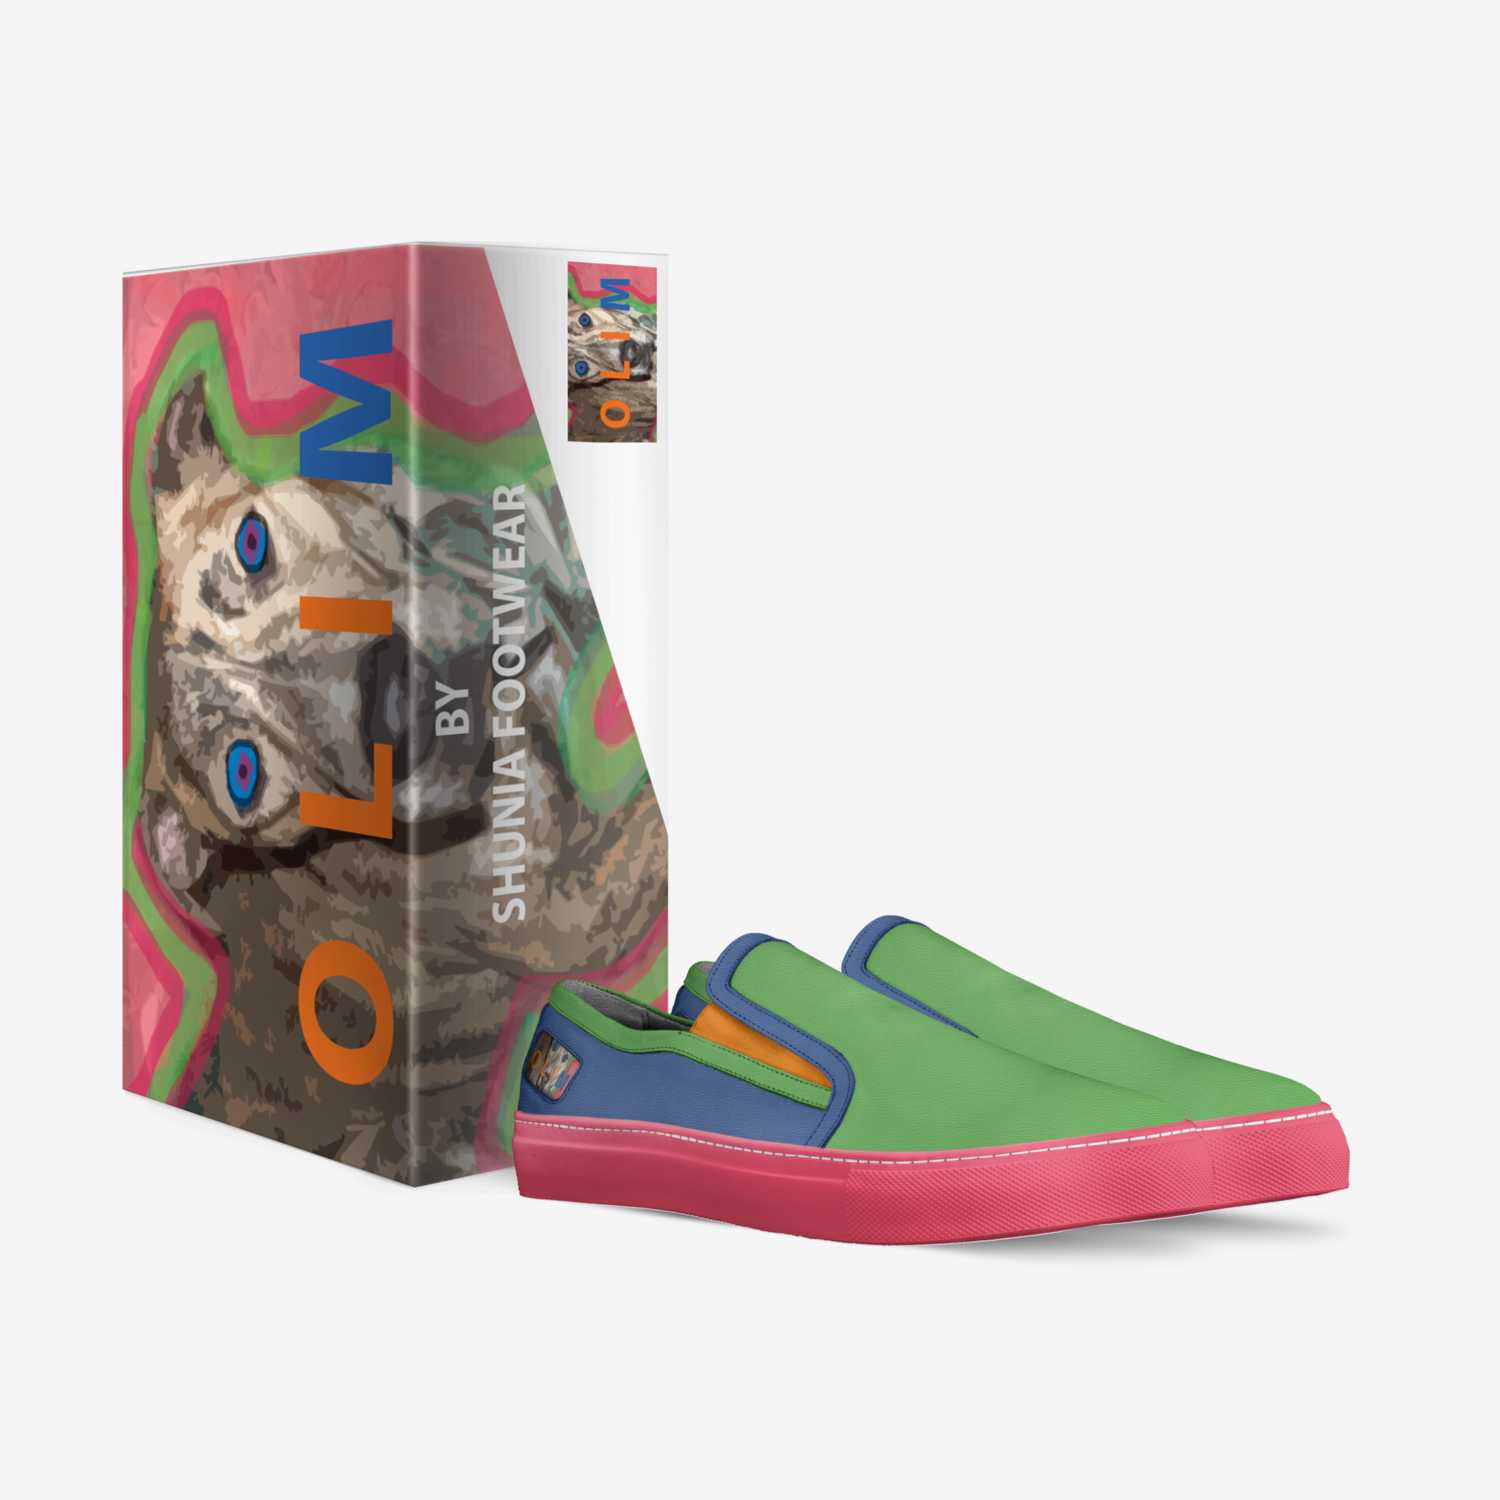 OLIM custom made in Italy shoes by Raghubir | Box view